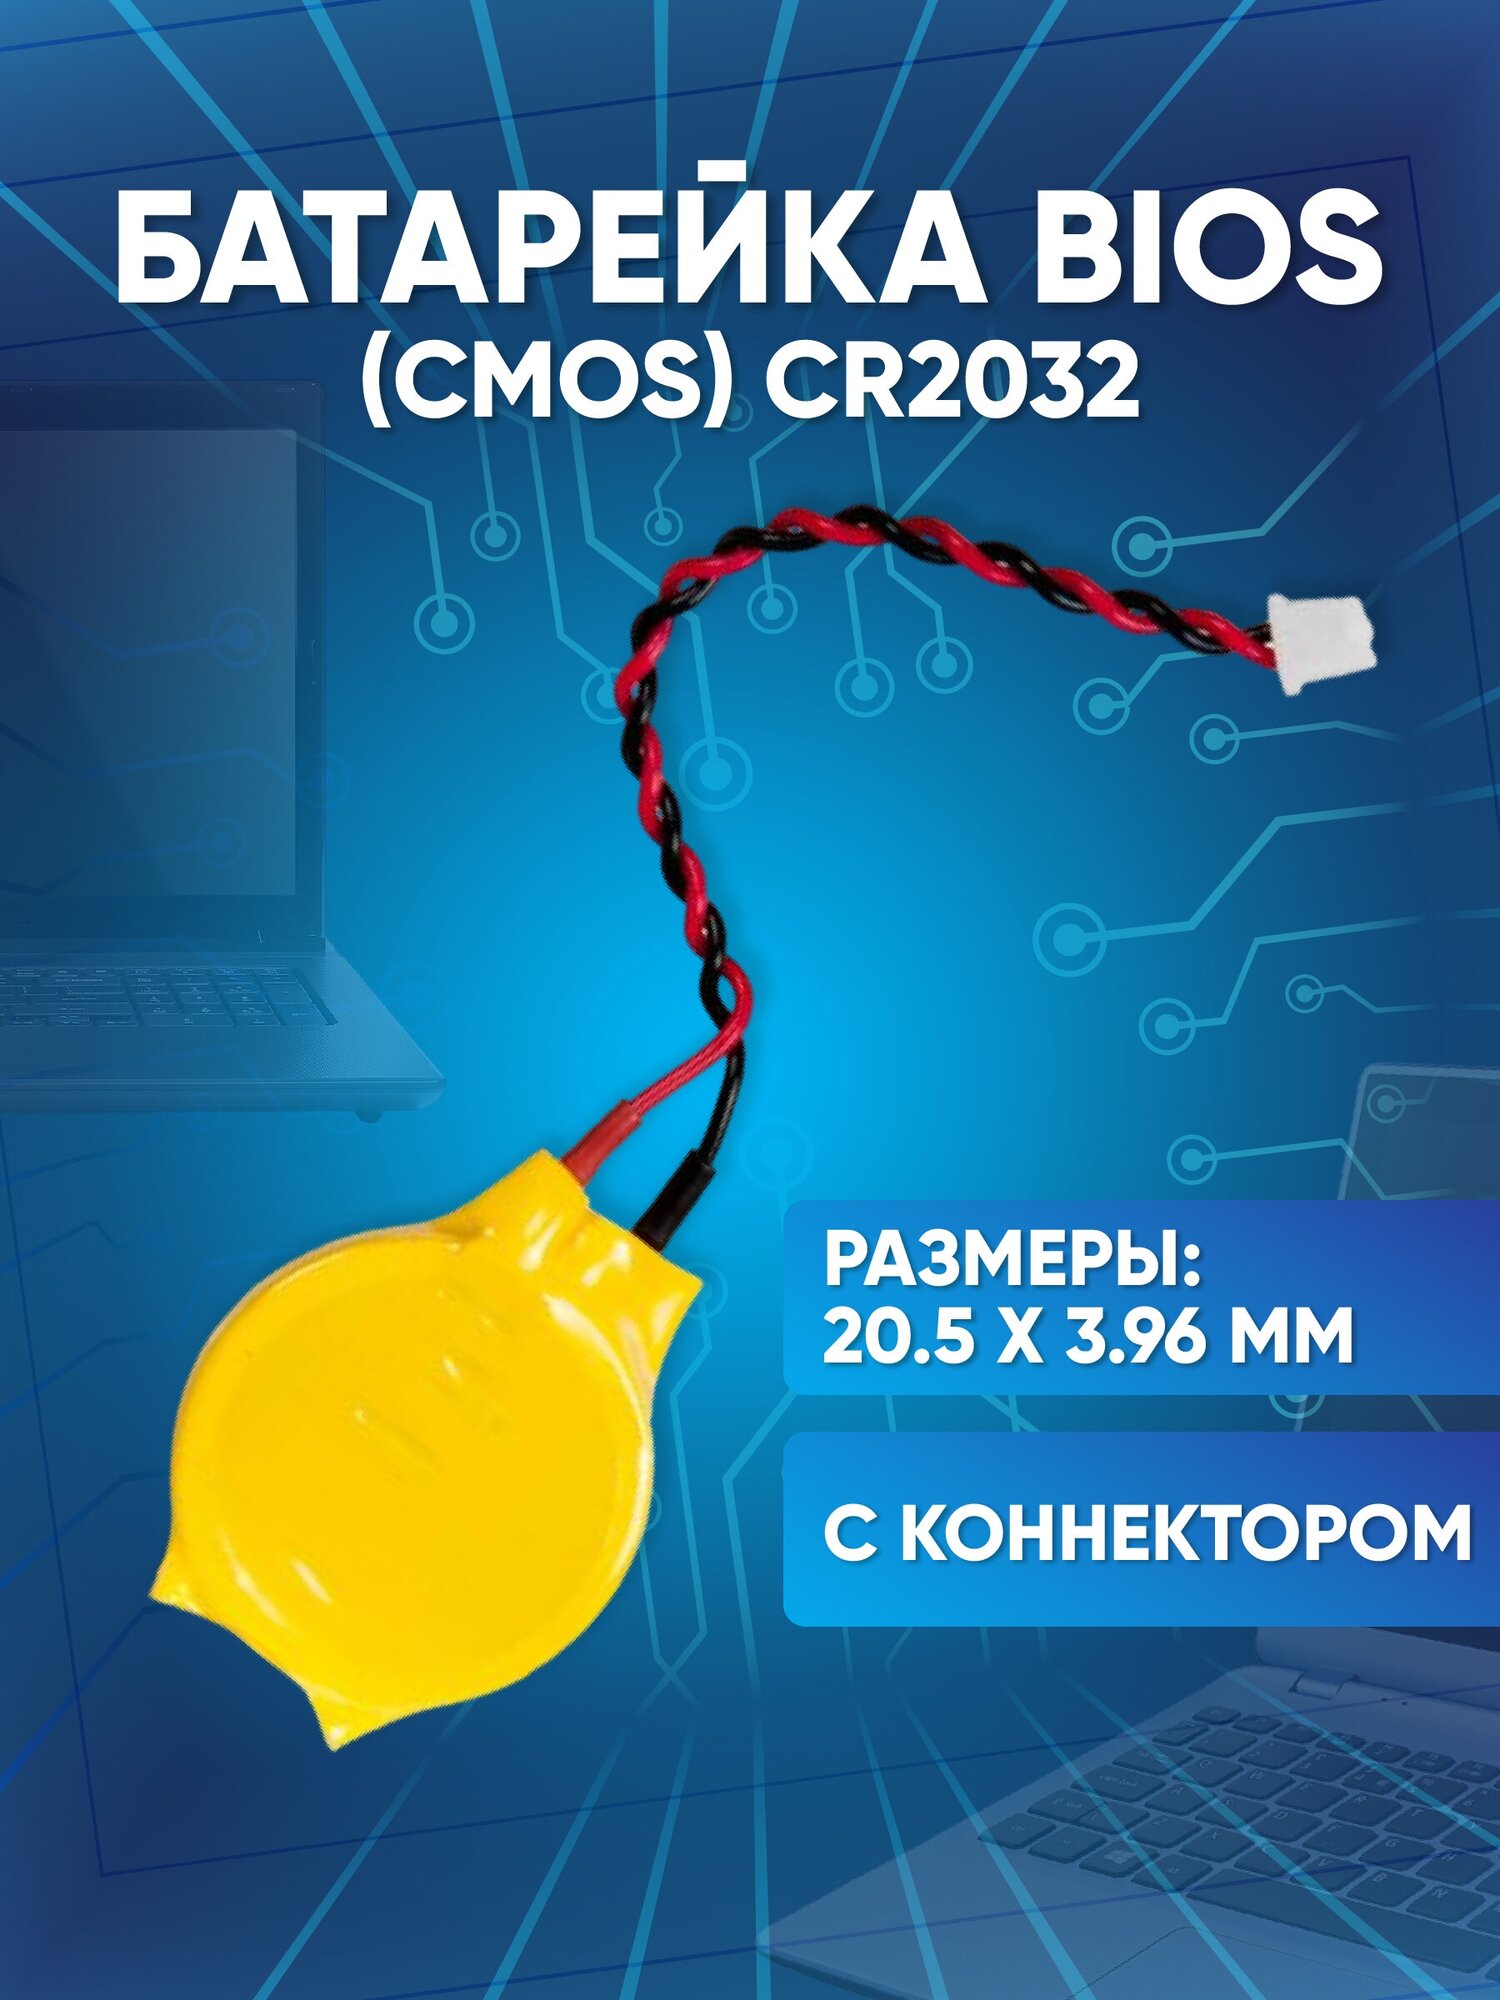 Батарейка с коннектором / BIOS / п. н. CMOS CR2032